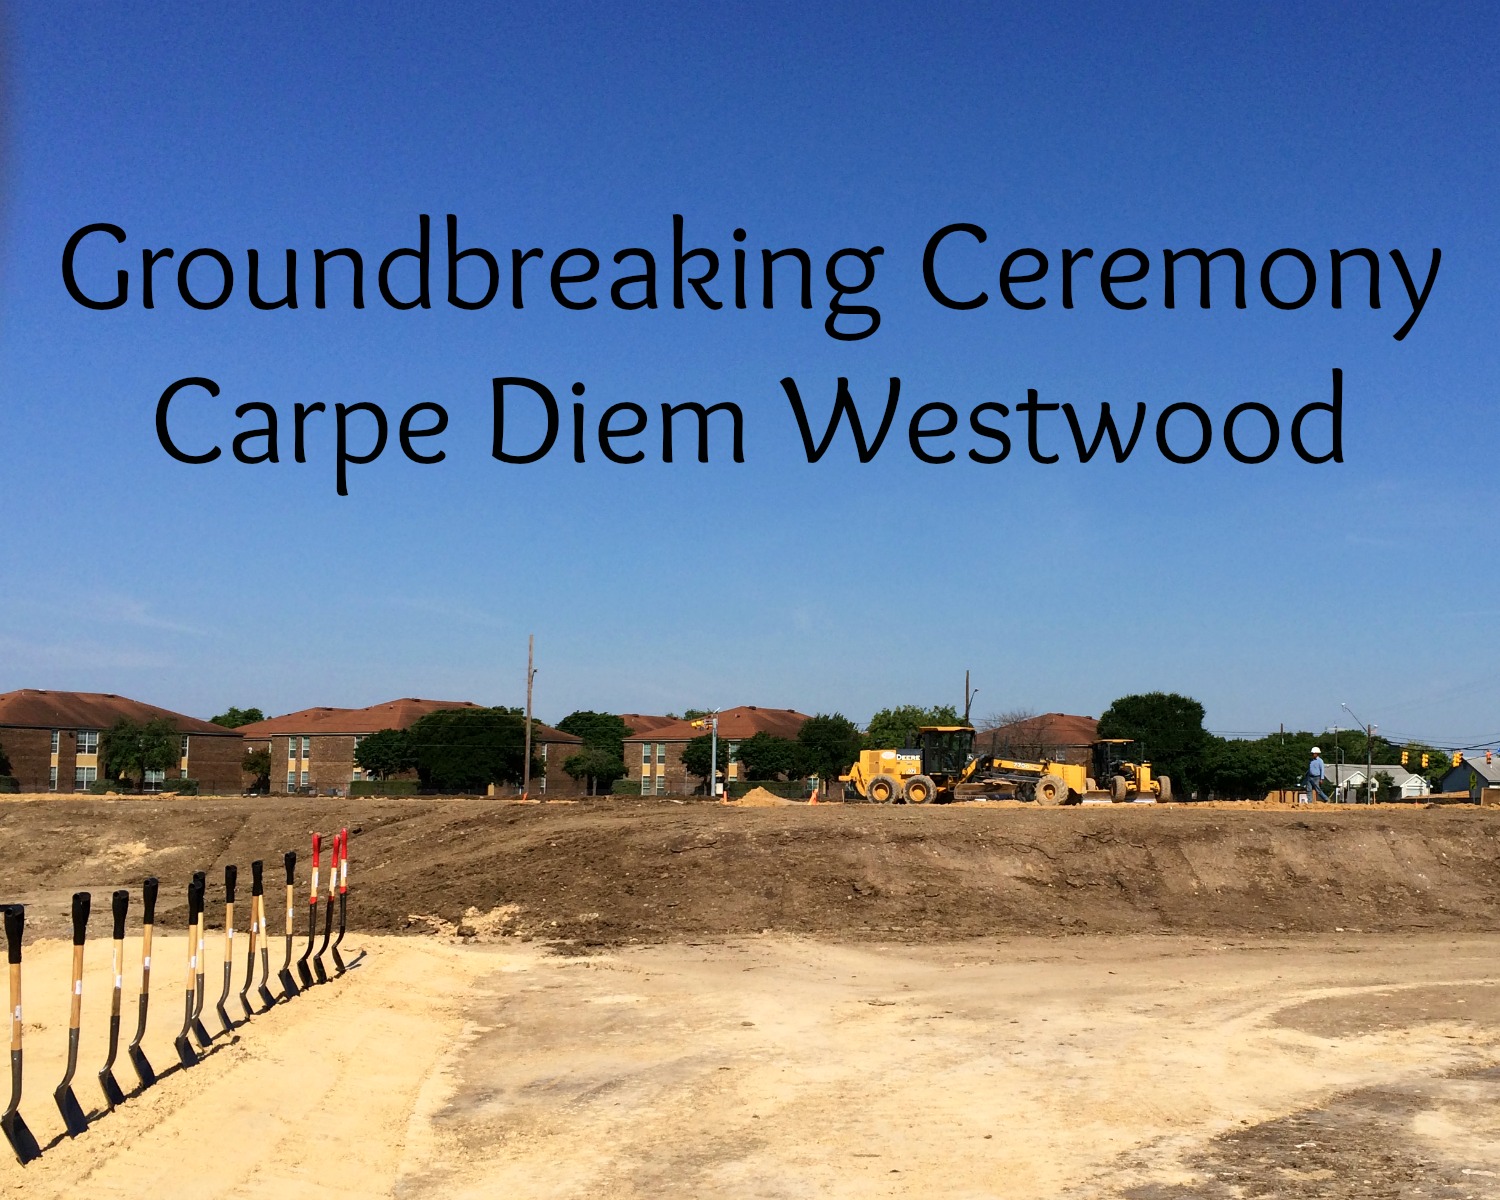 Groundbreaking ceremony at Carpe Diem Westwood | San Antonio Charter Moms